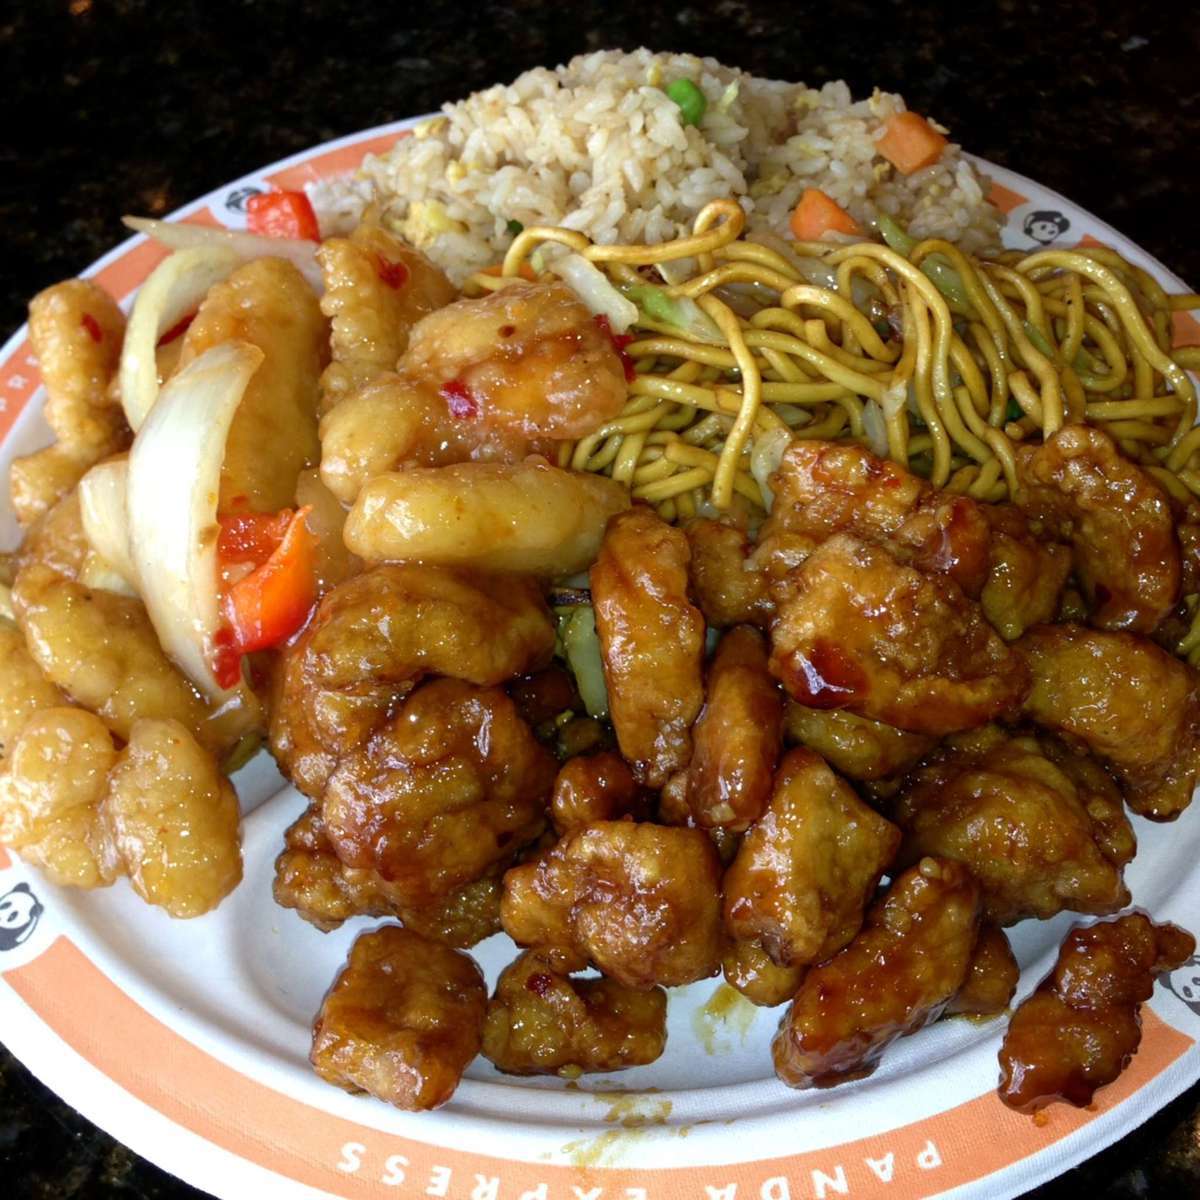 Panda Express food on a plate